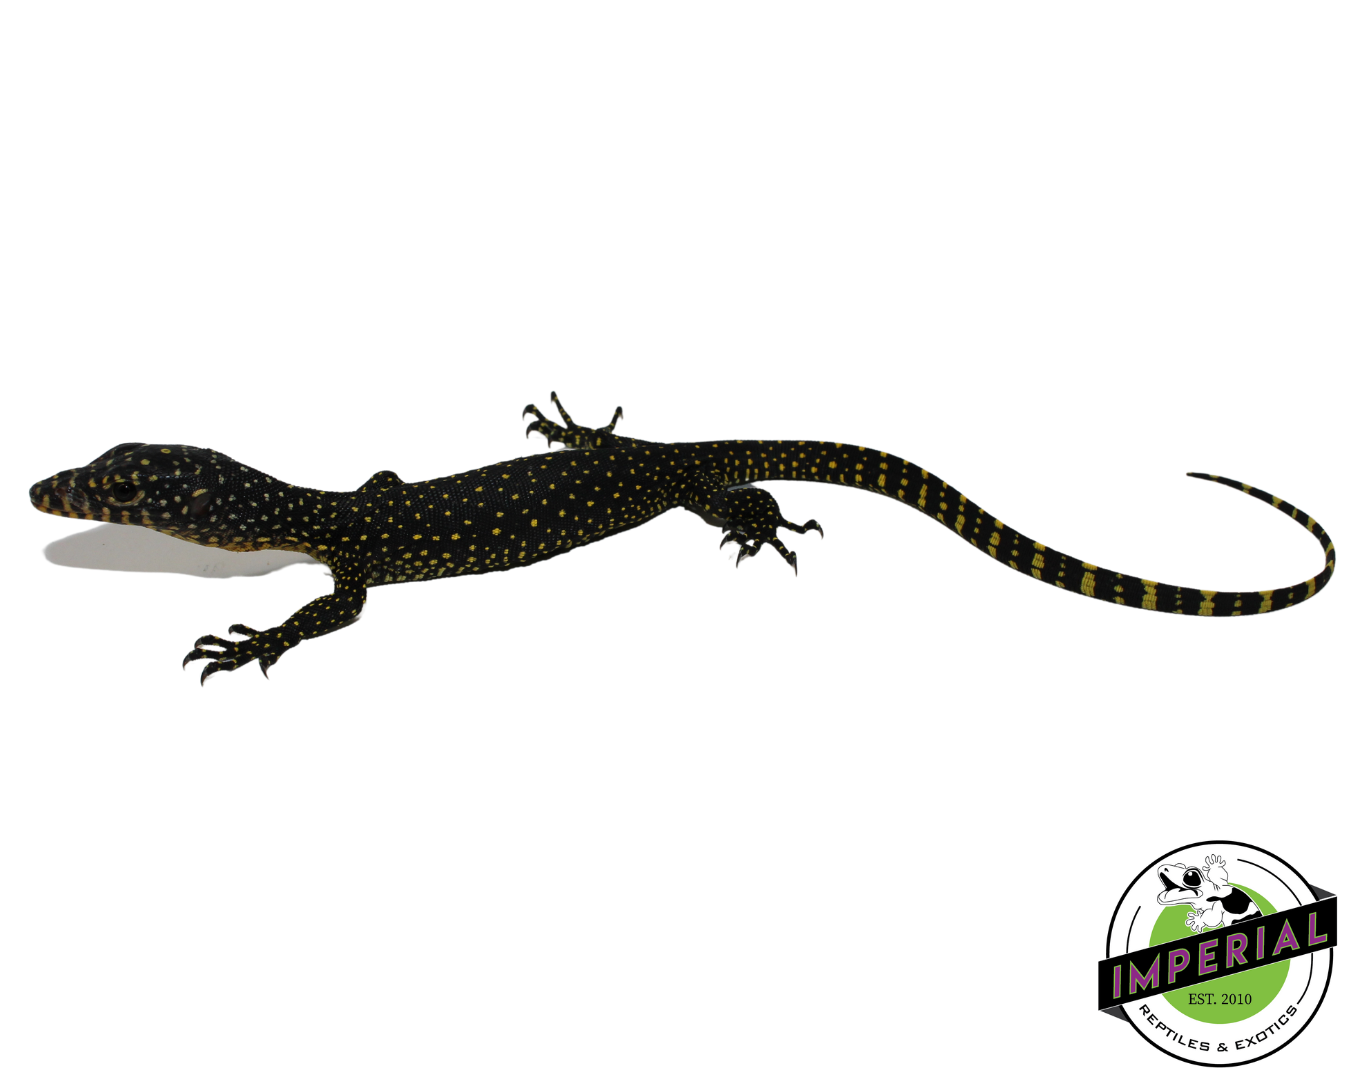 warsior mangrove monitor lizard for sale, buy reptiles online